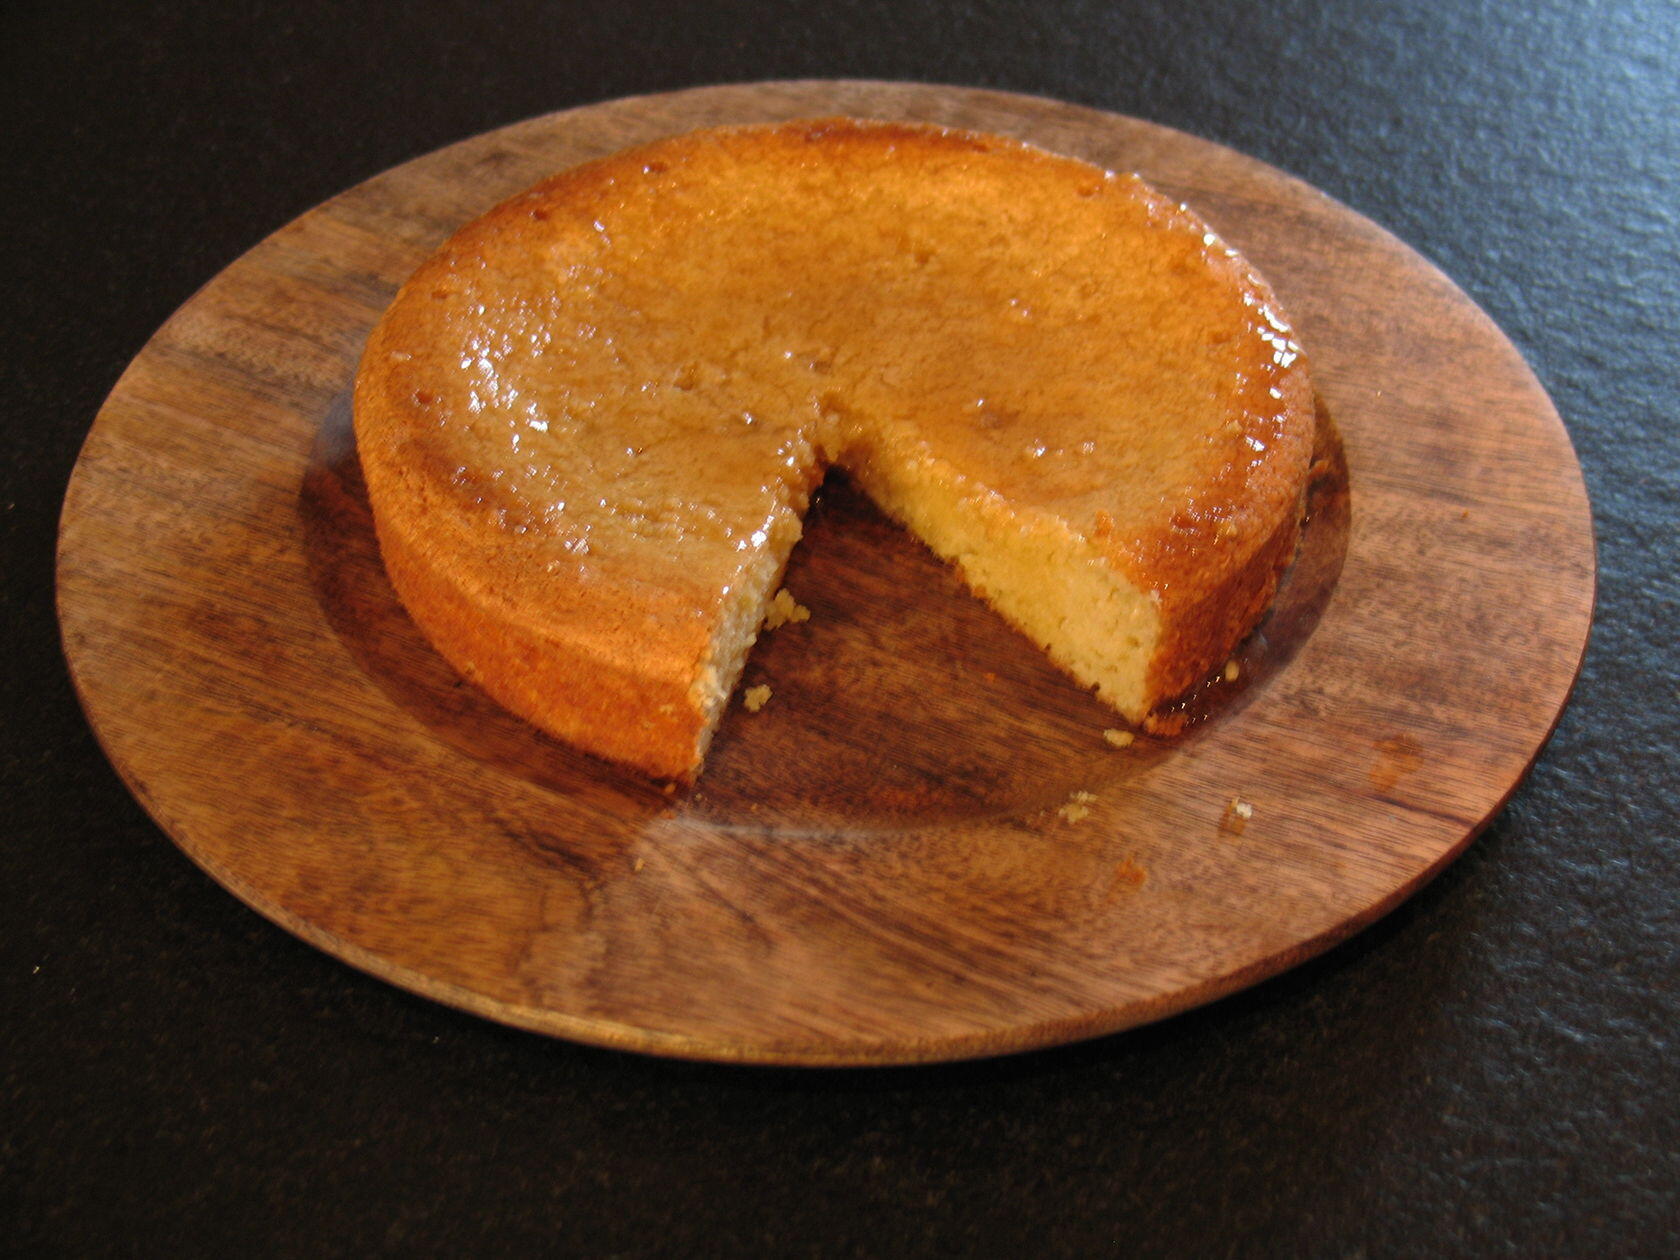 Almond Yogurt Cake Recipe - How to make a cake with almond flour -  bakealish.com - YouTube